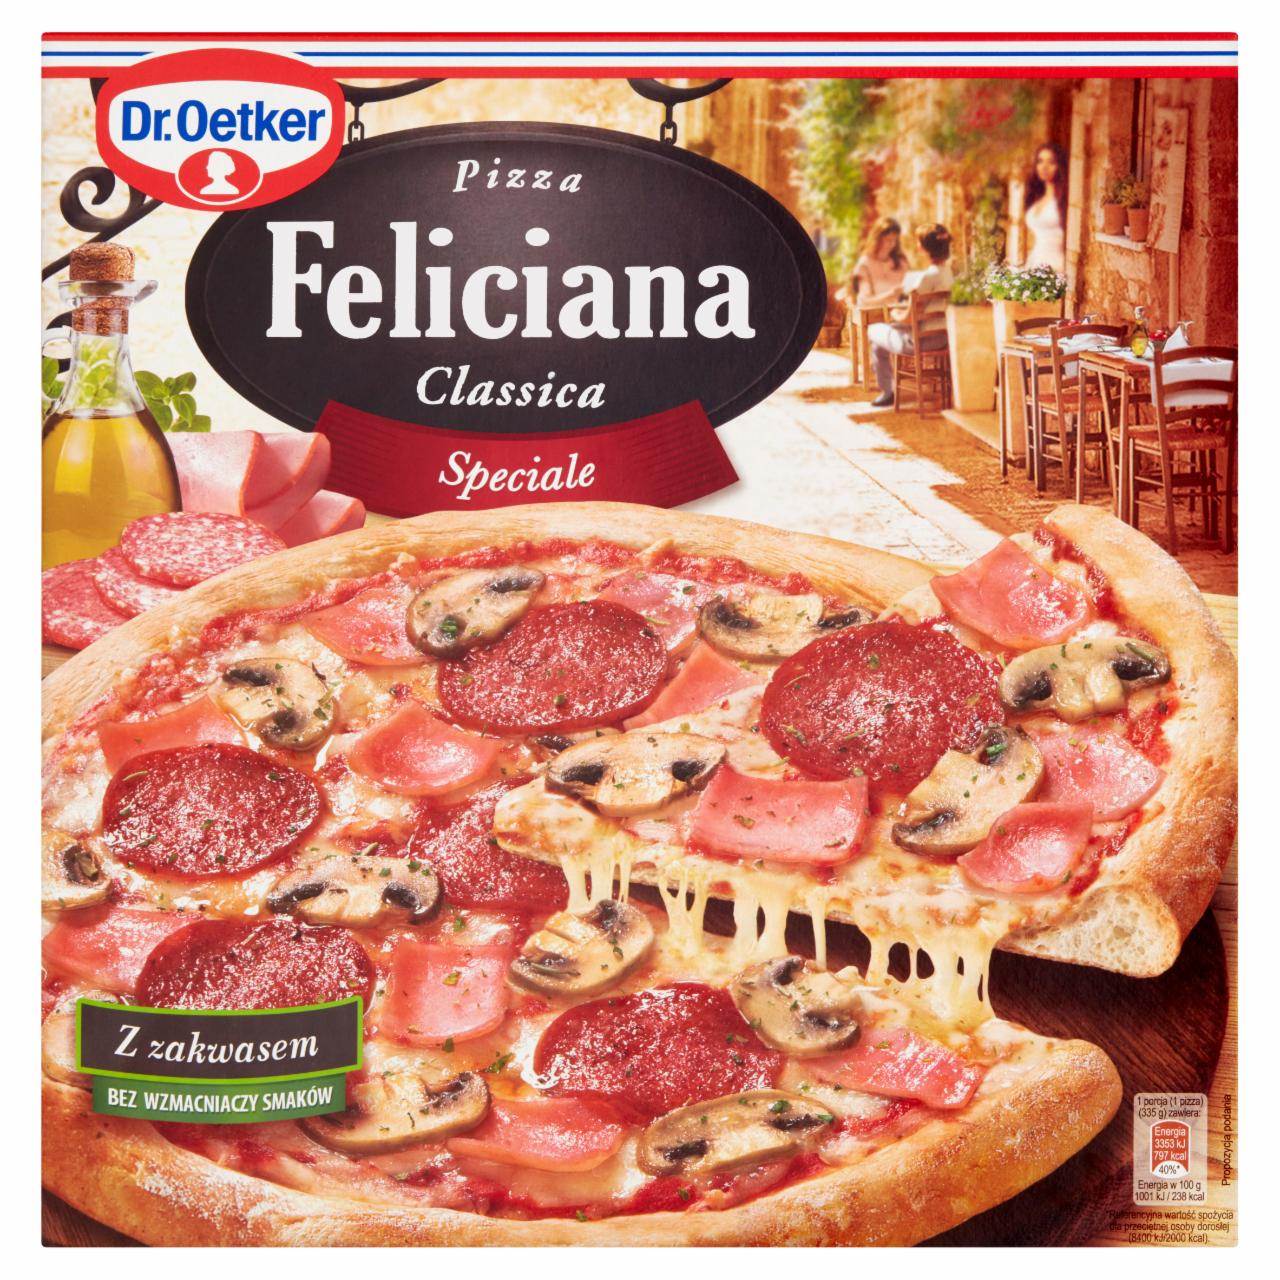 Zdjęcia - Dr. Oetker Feliciana Classica Pizza Speciale 335 g